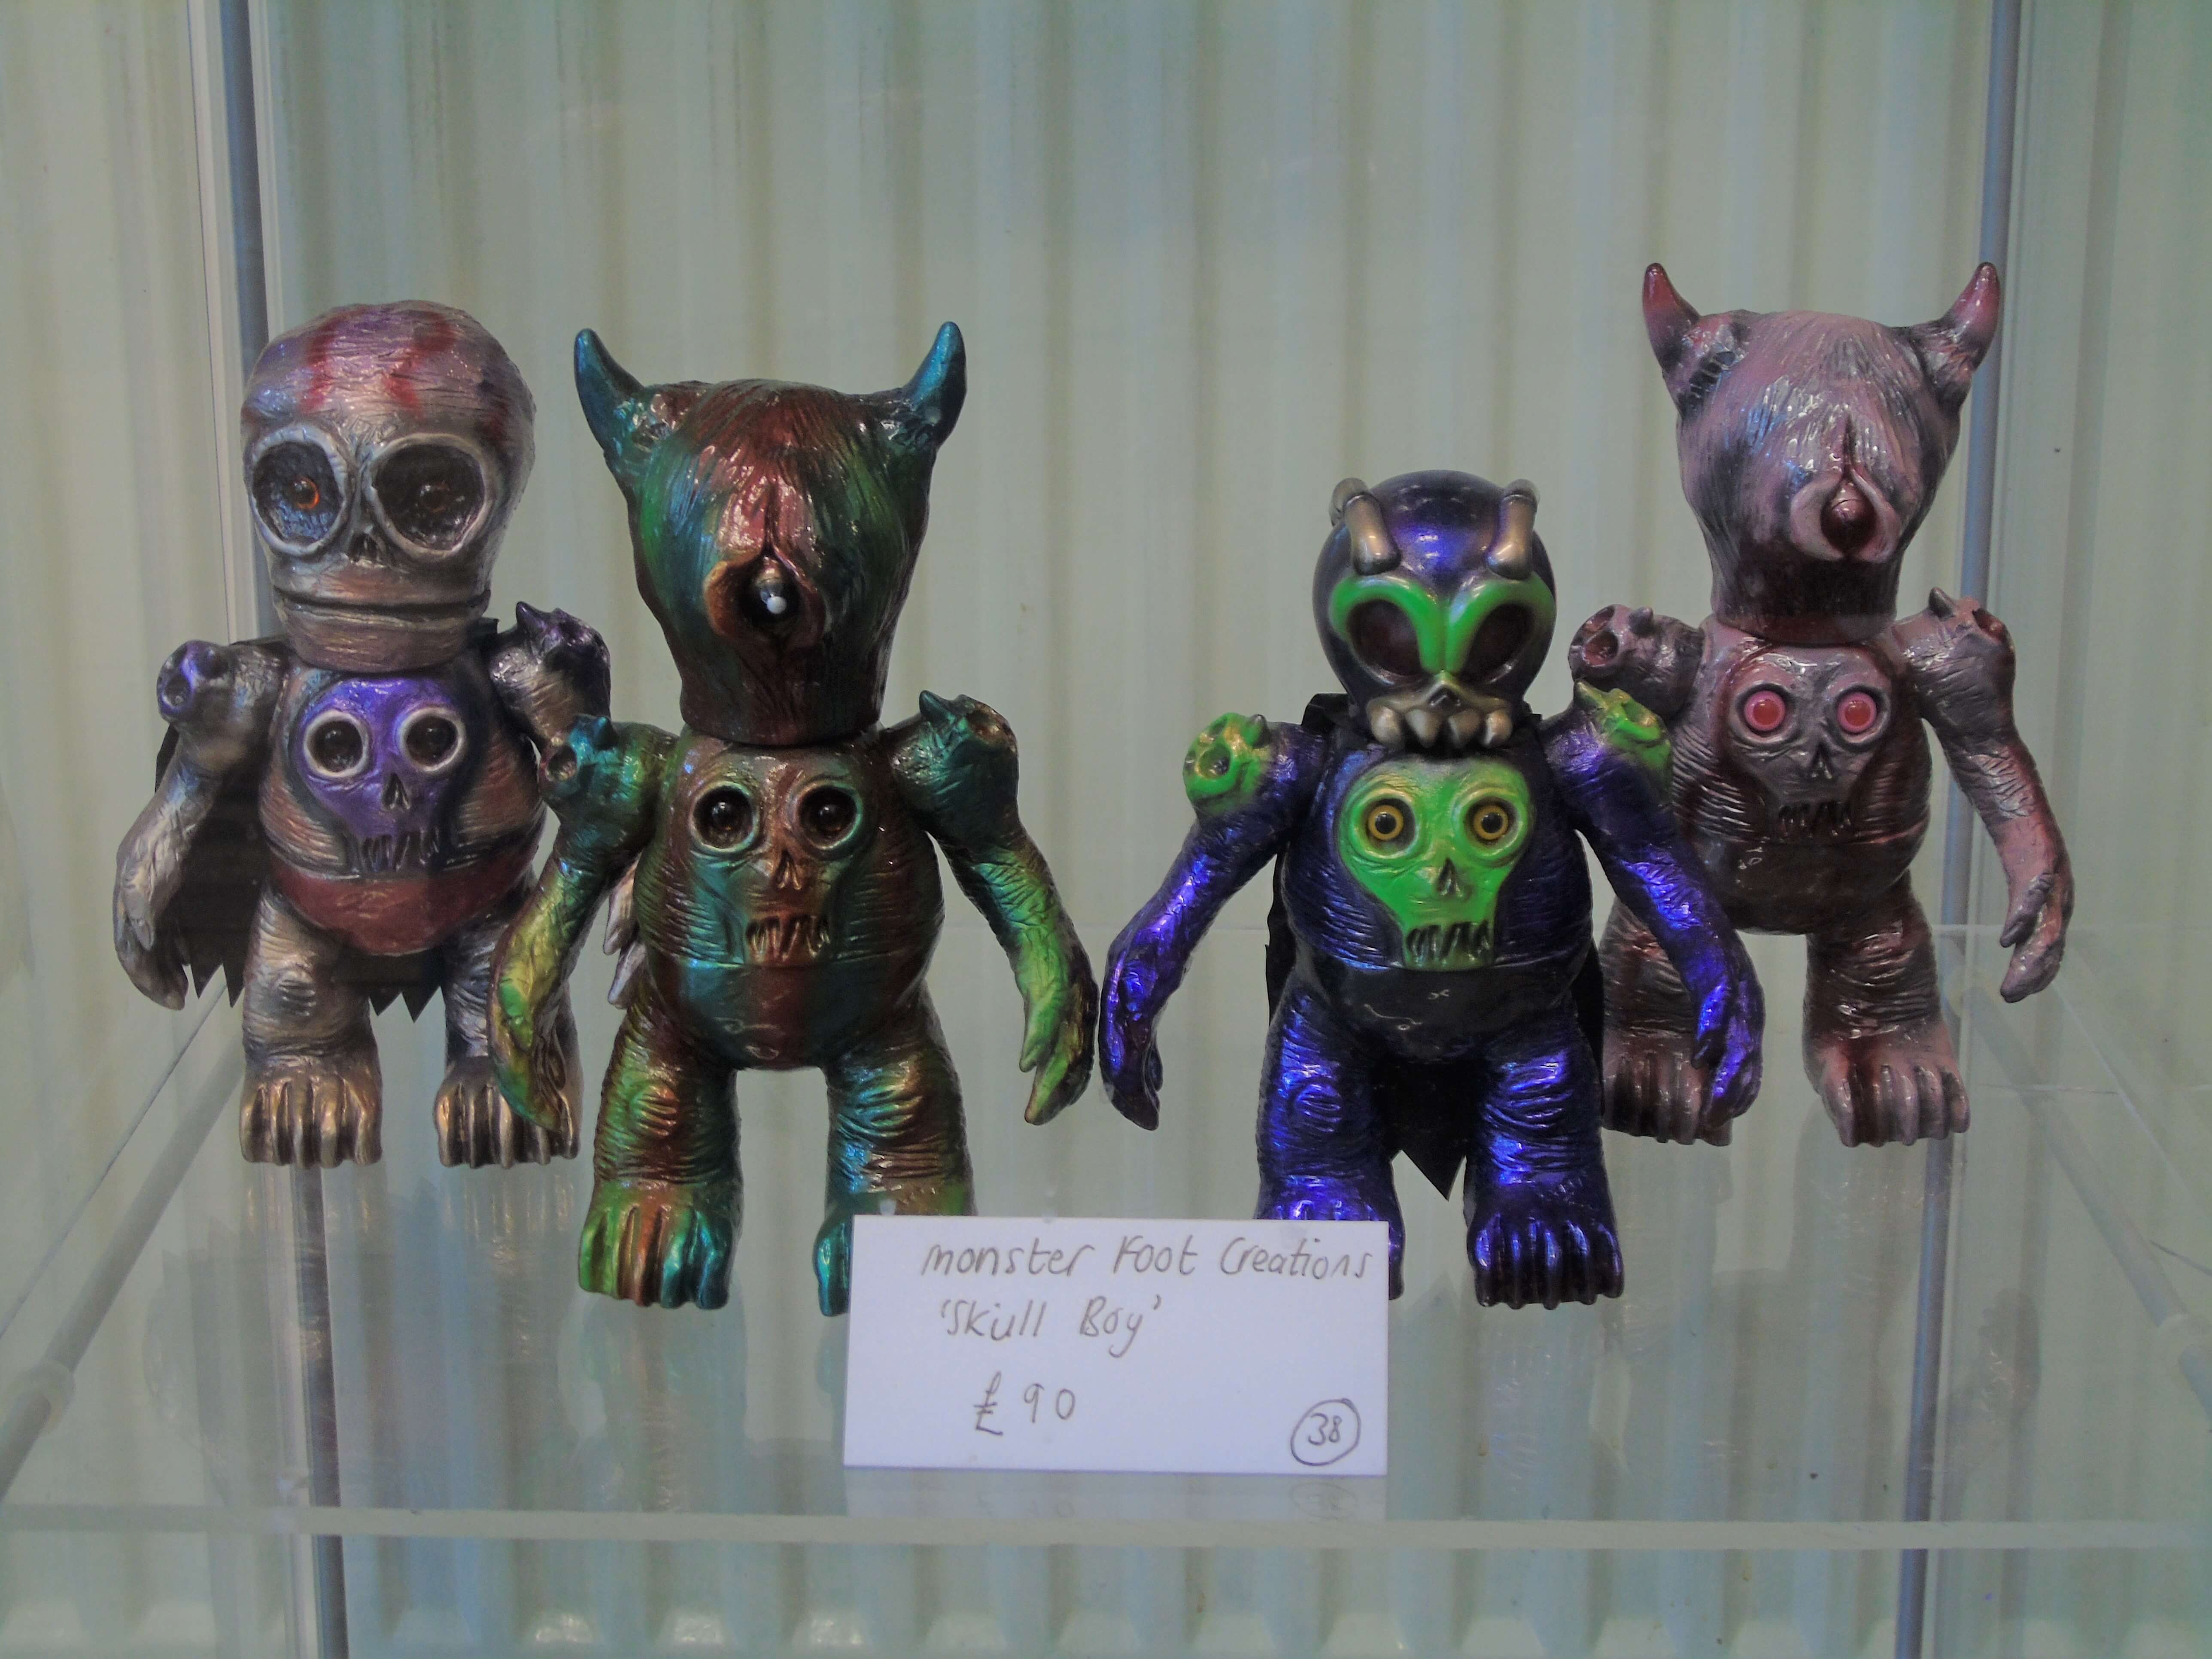 Creepshow 2 Leeds Monsterfoot Creations 'Skull Boy' -- Photo courtesy of Kam Zubairi